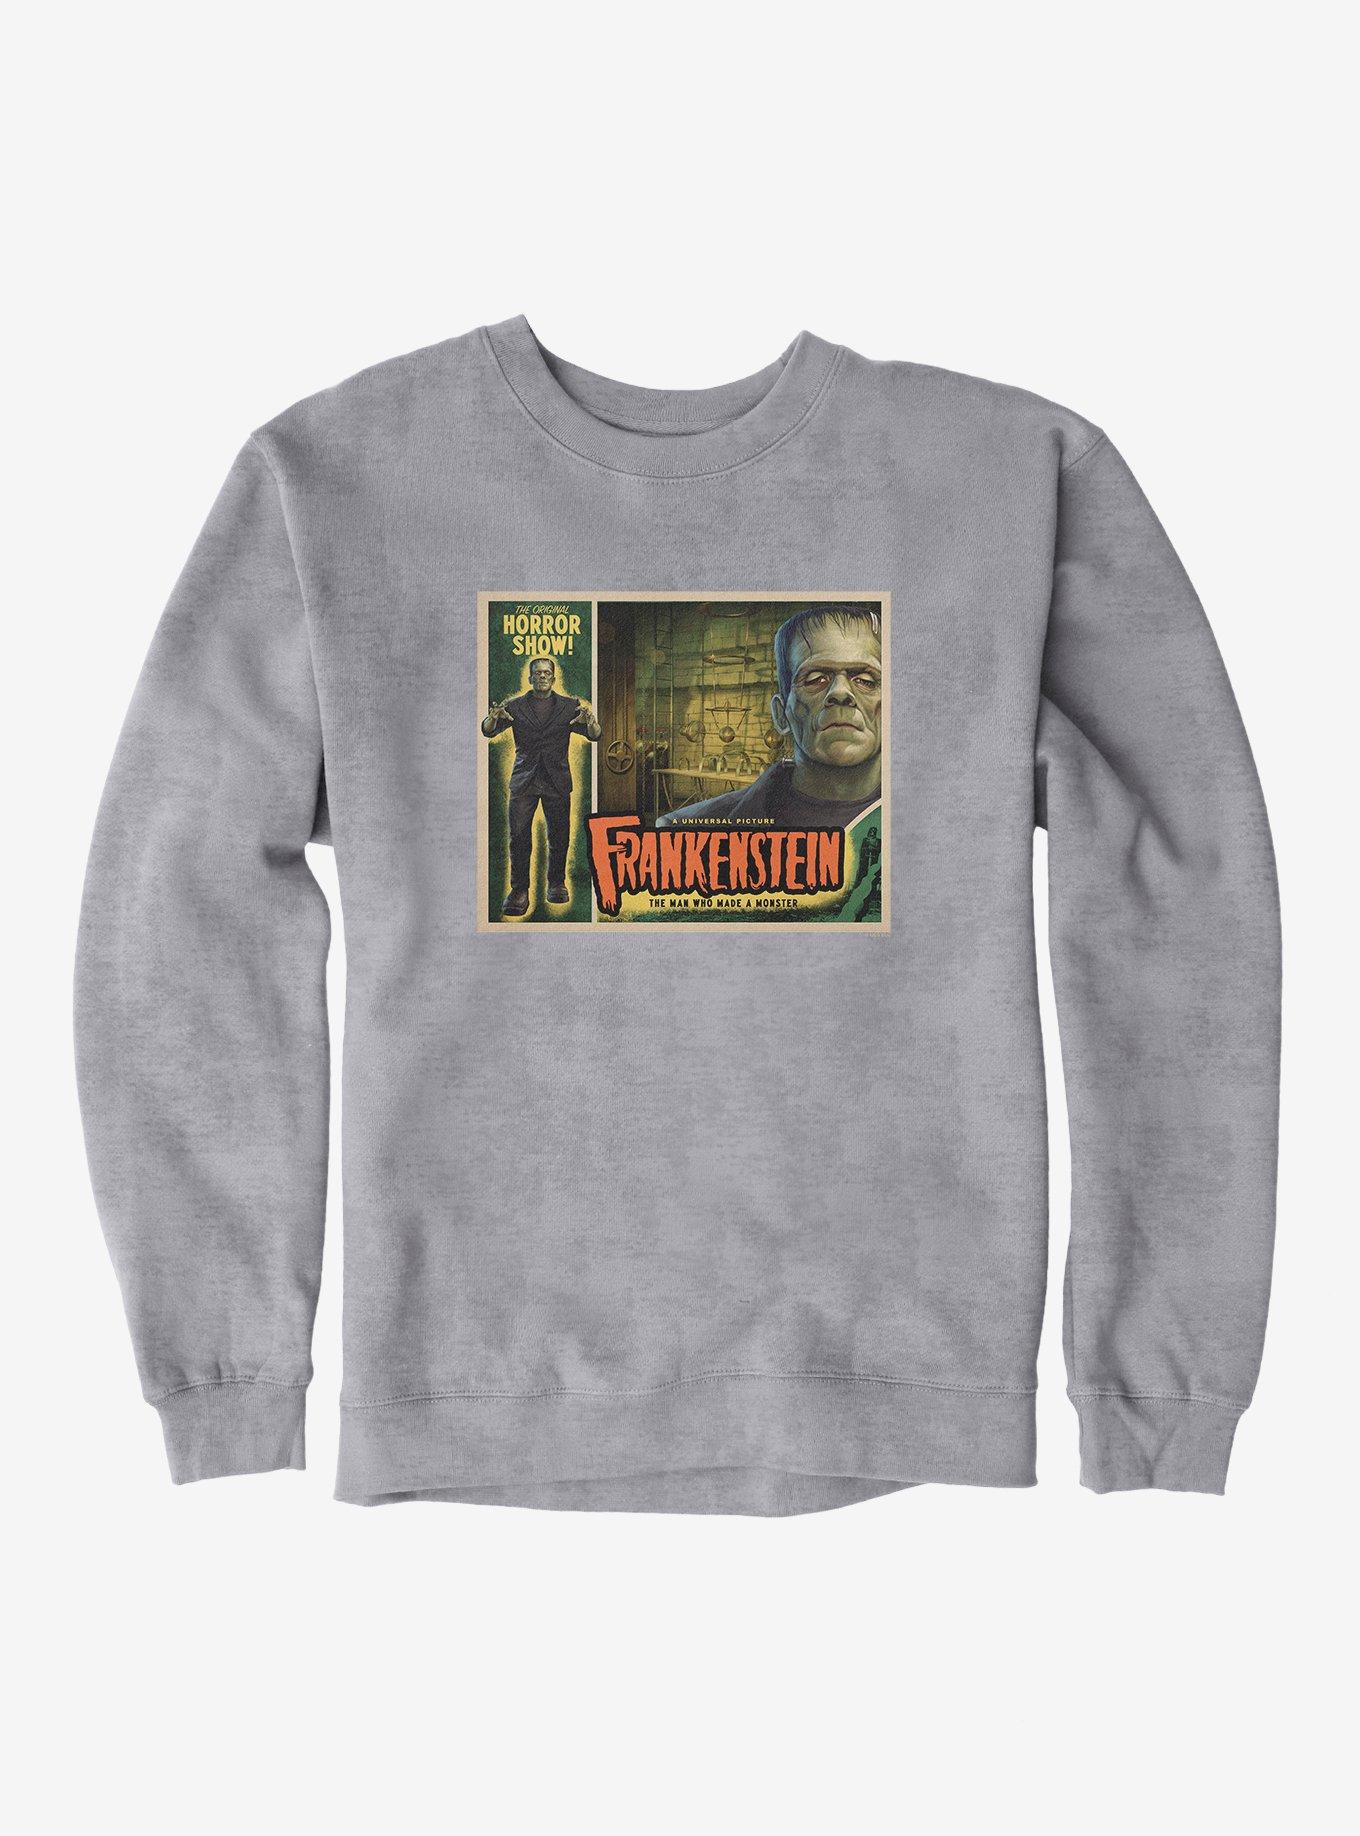 Frankenstein The Man Who Made A Monster Sweatshirt